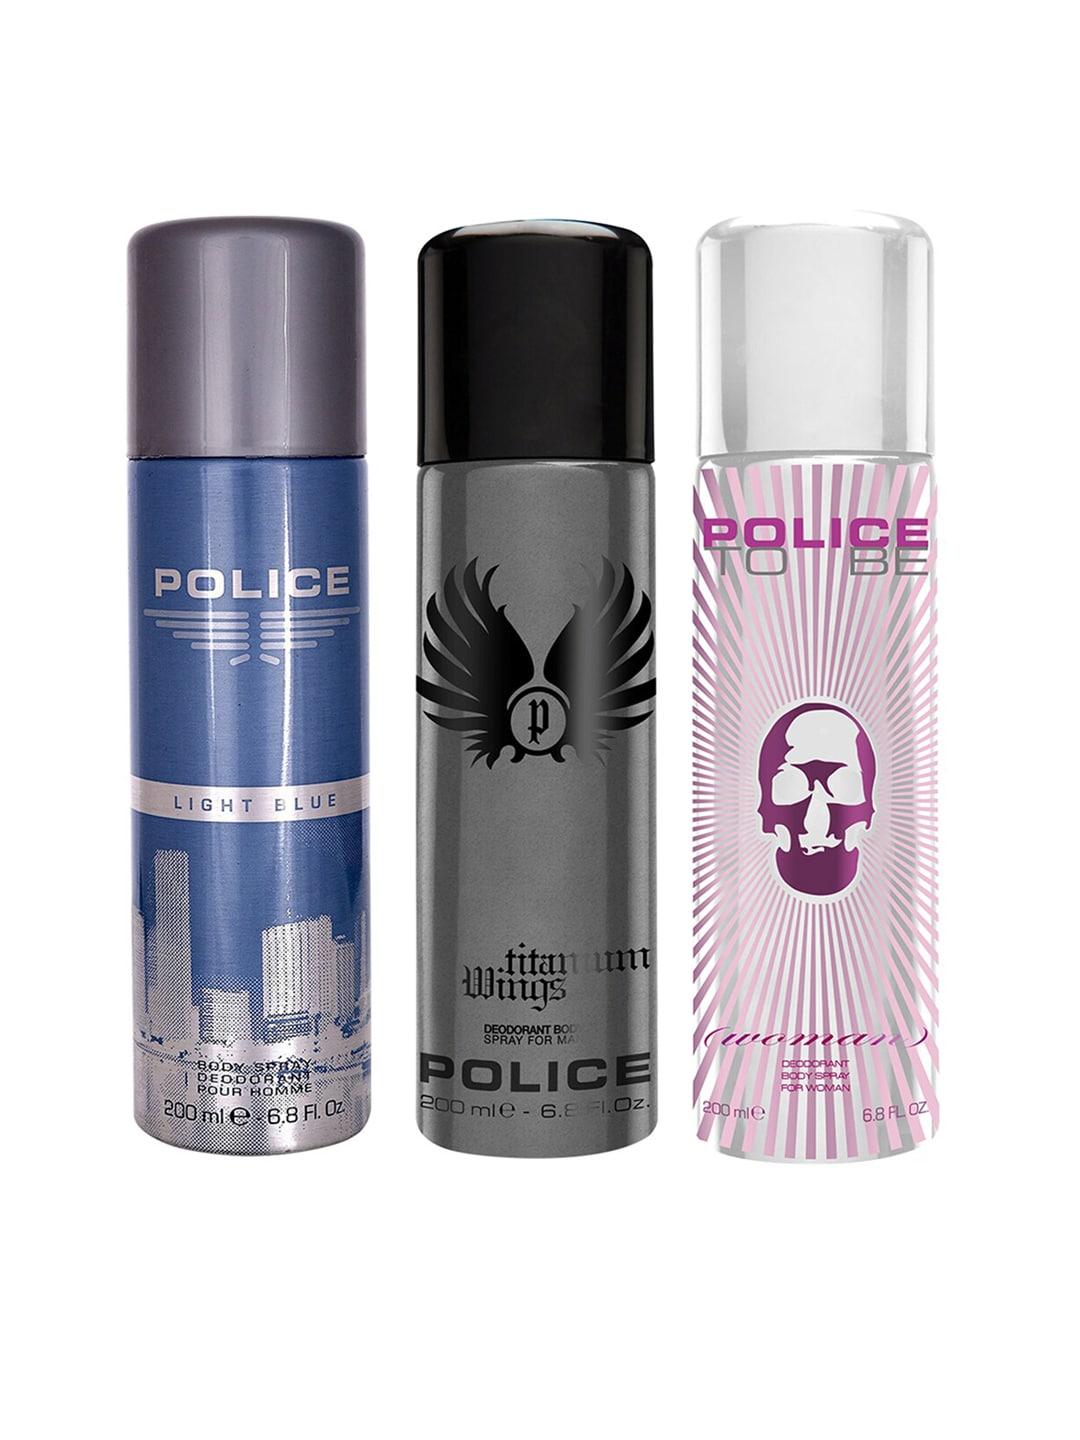 Police Set of 3 Men & Women Deodorant-Light Blue + Wings Titanium + To Be Woman-200ml each